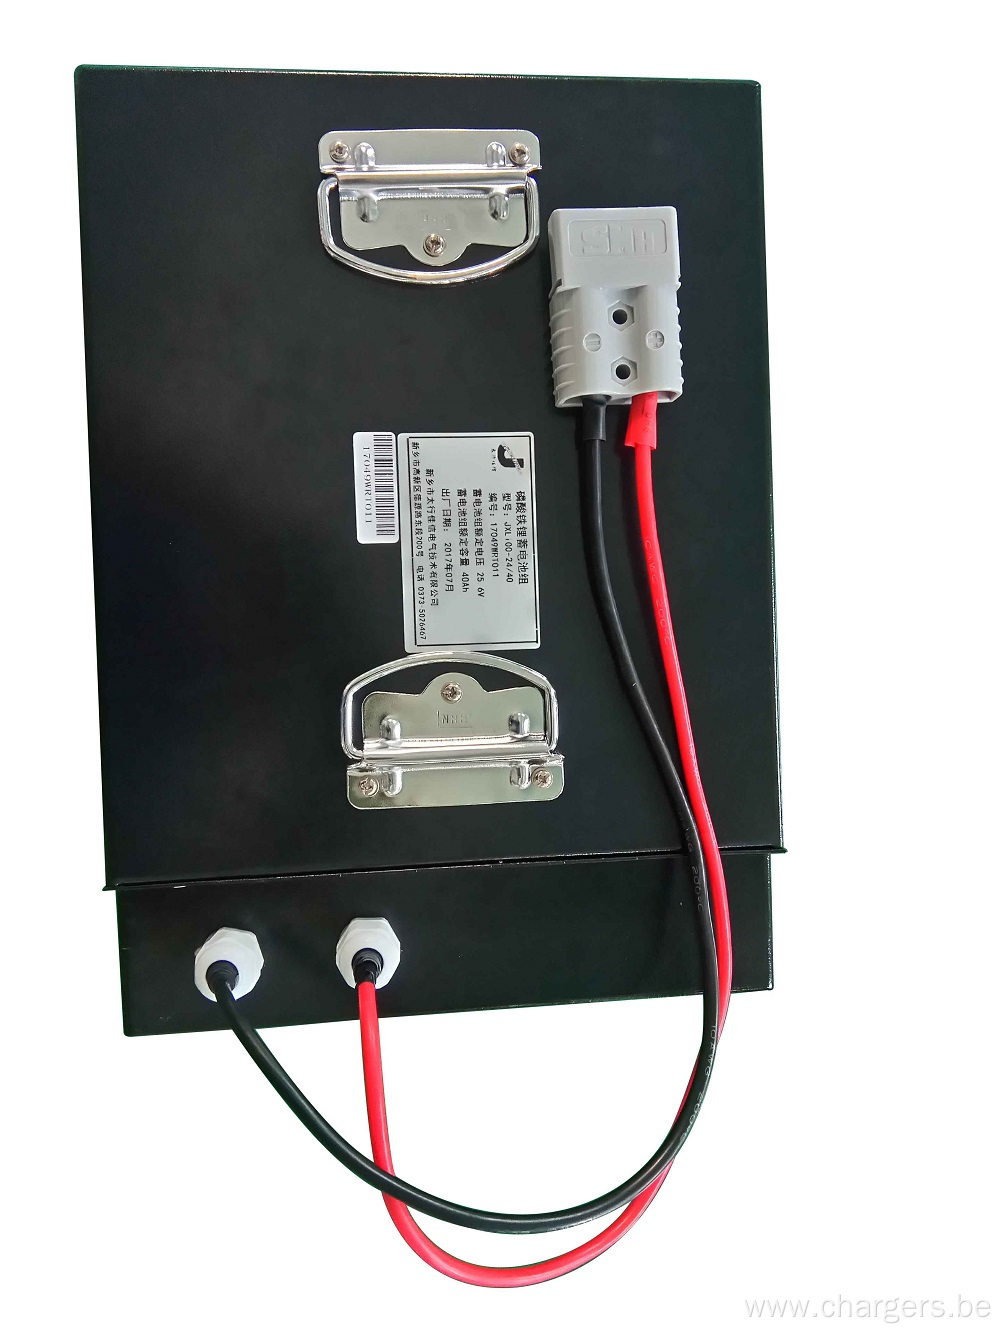 24V/40AH Li-ion Battery Pack with Standard Anderson Plug